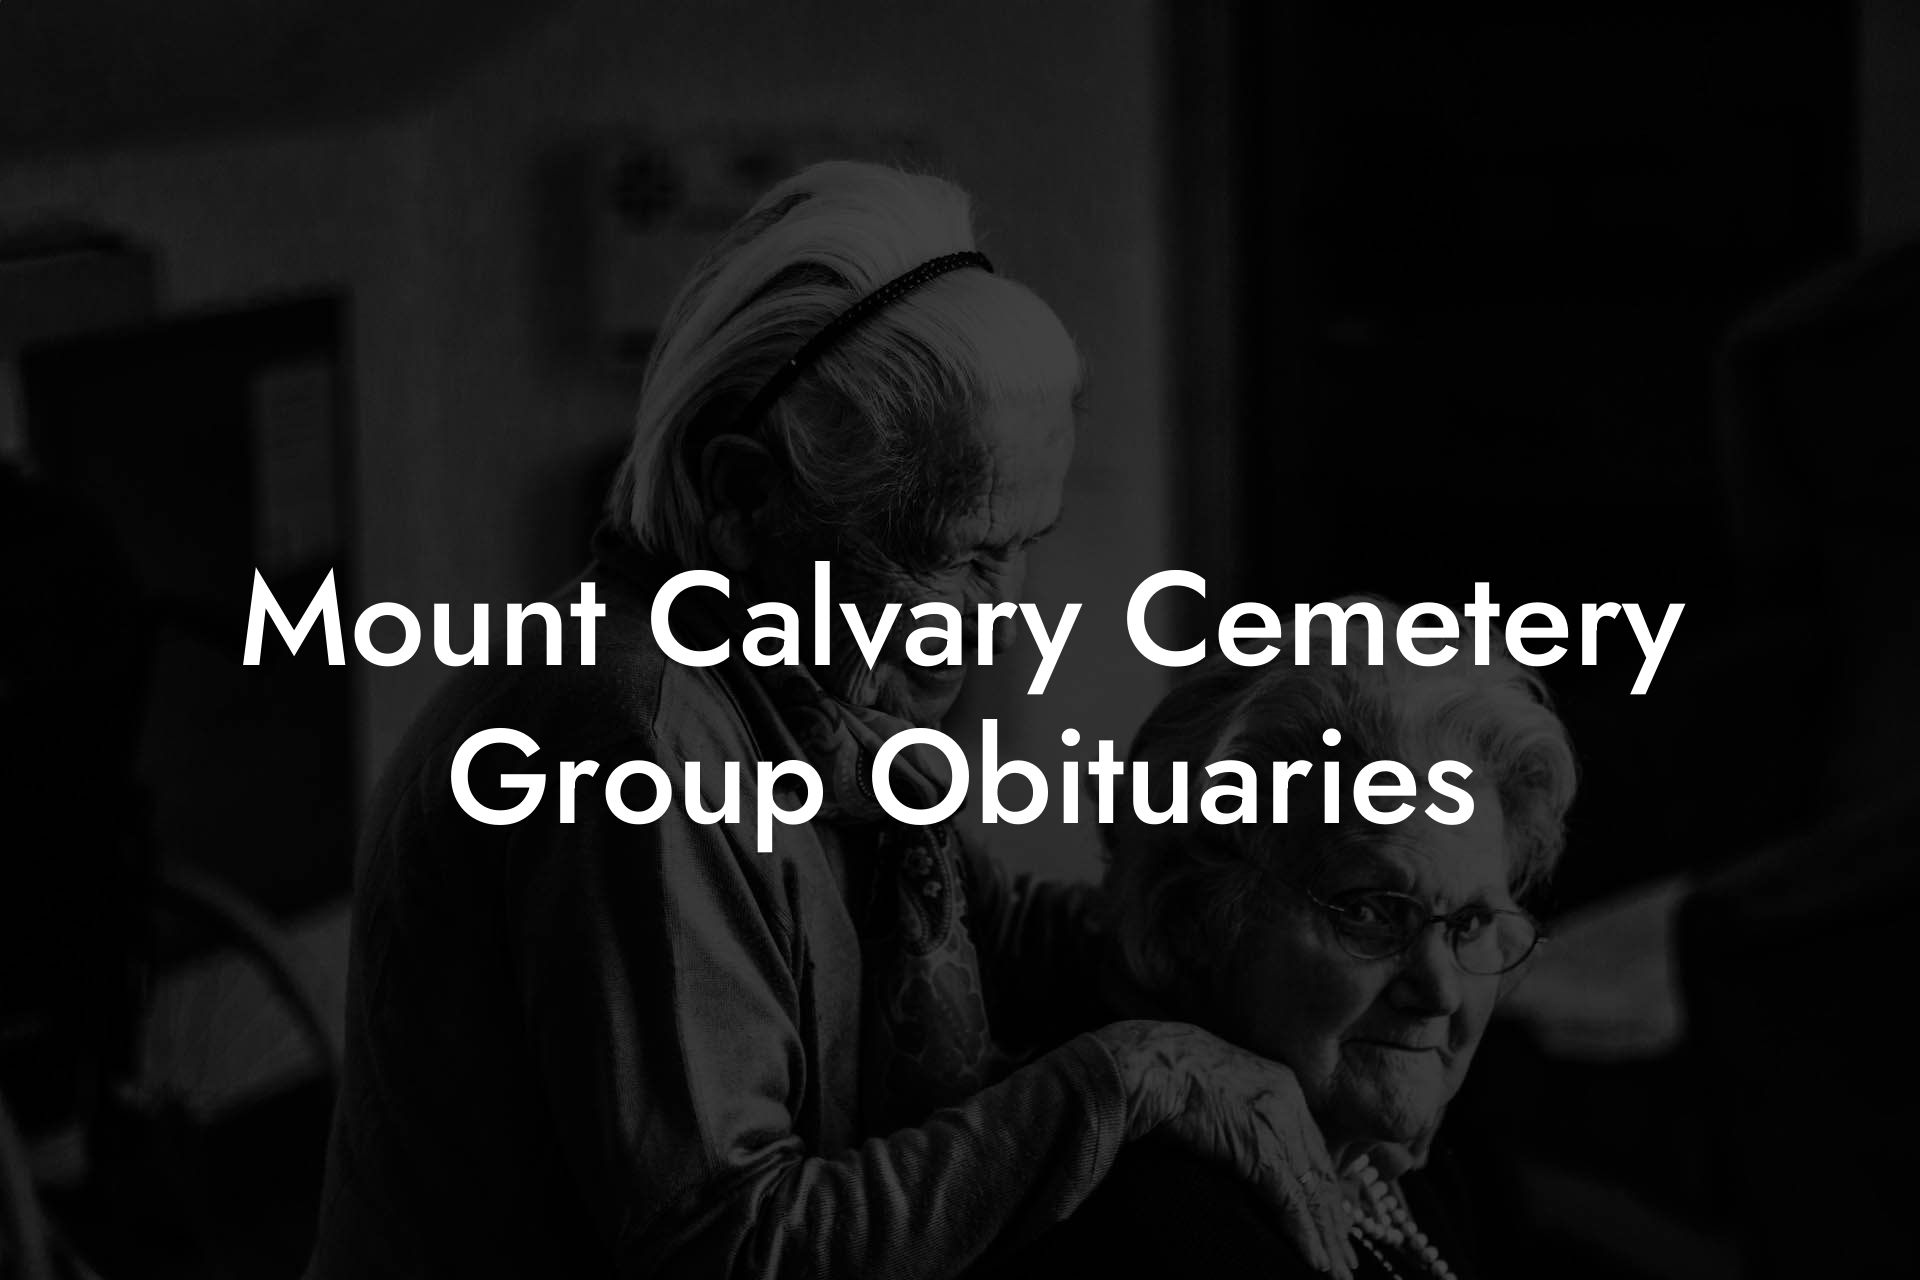 Mount Calvary Cemetery Group Obituaries